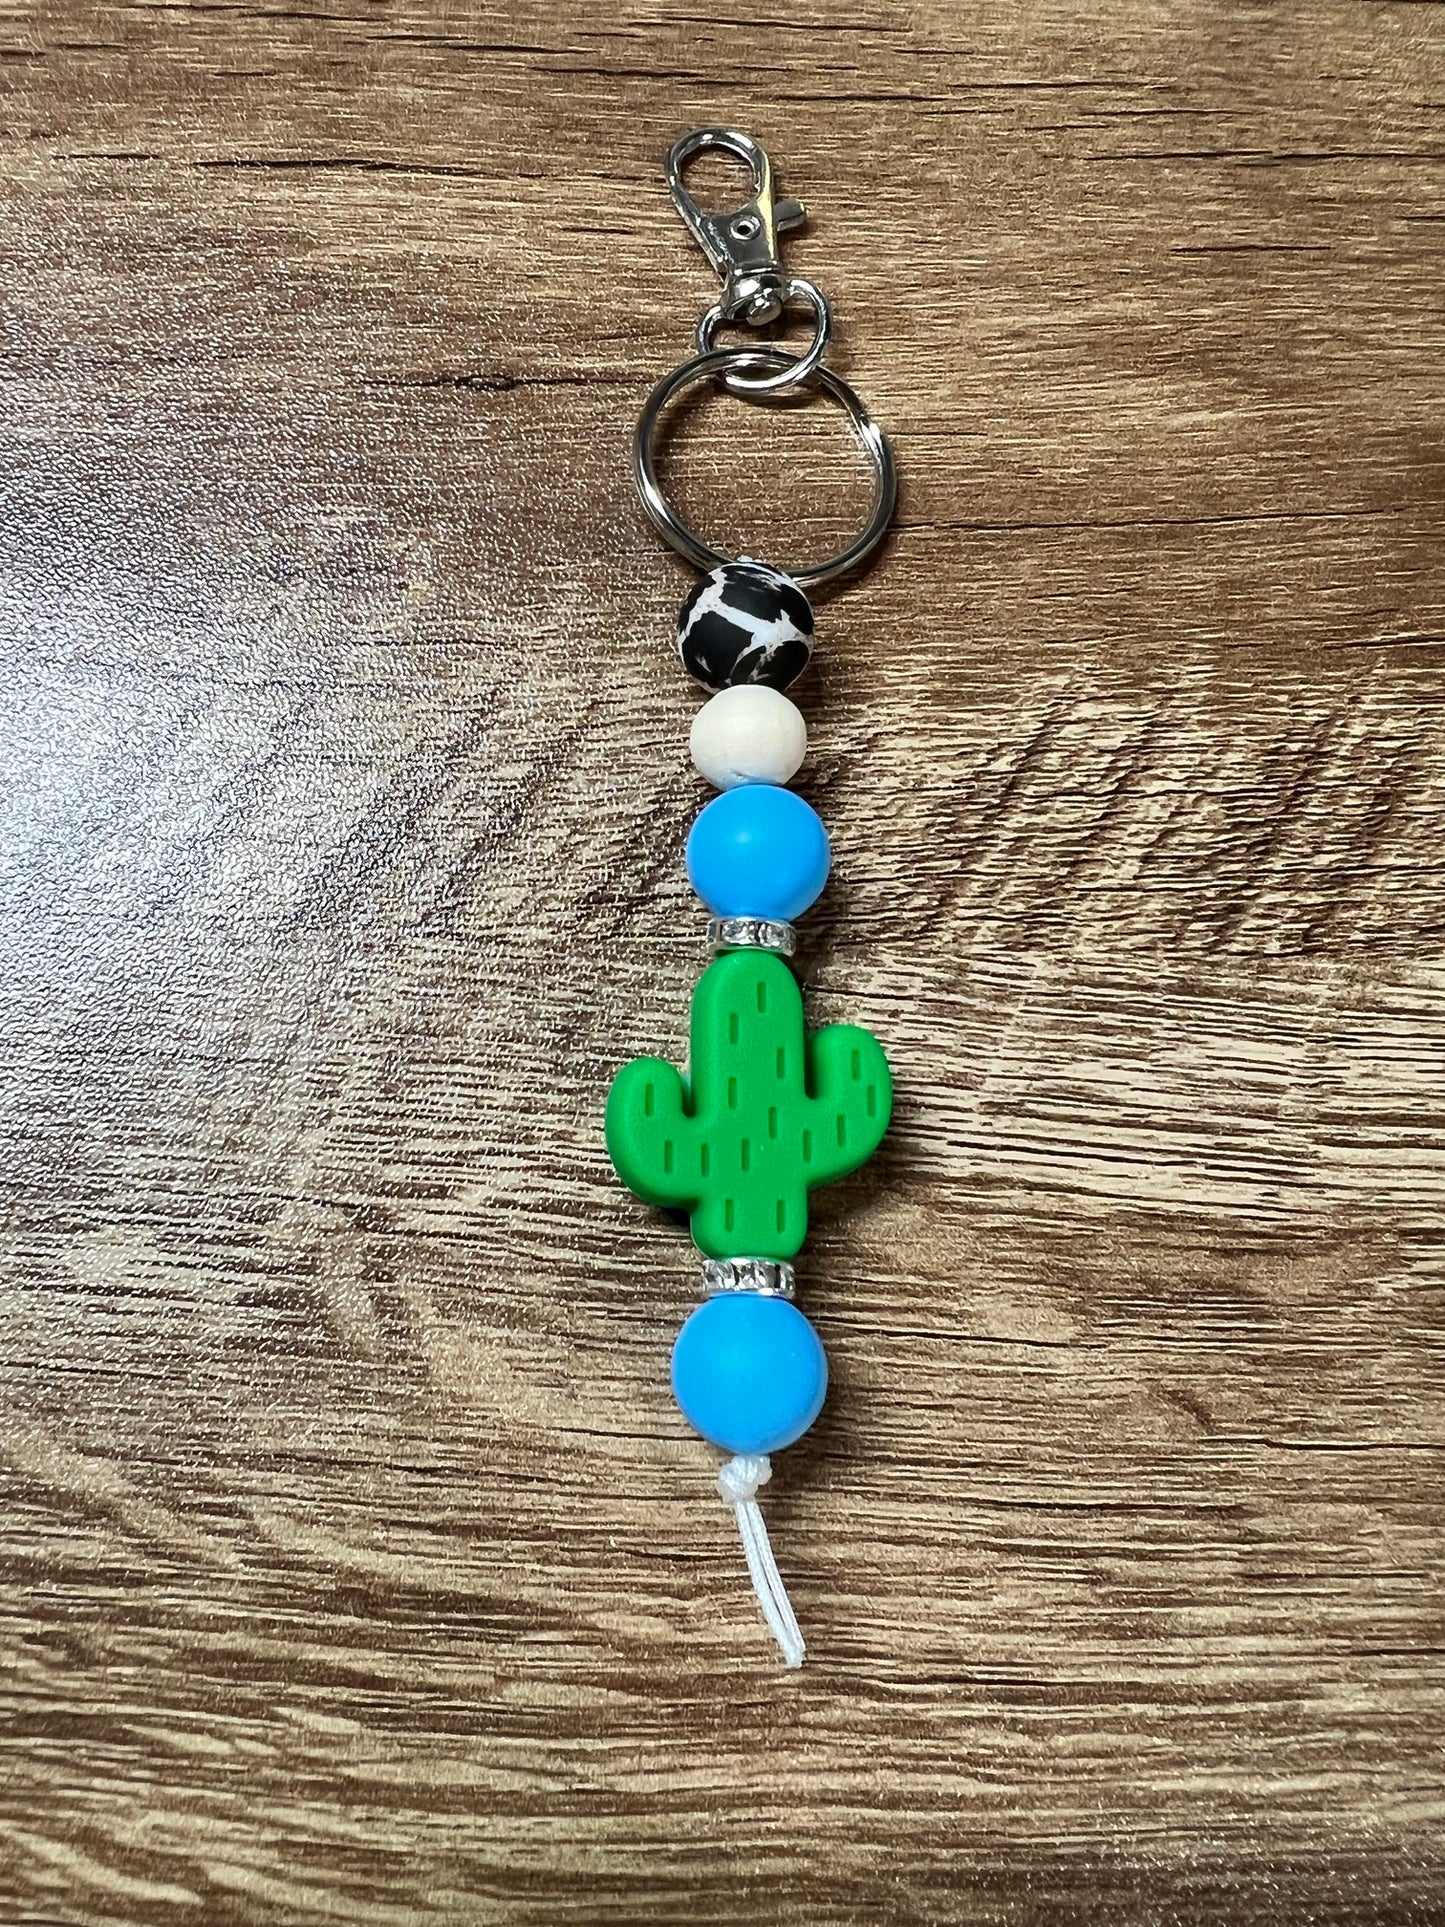 Cactus Keychains